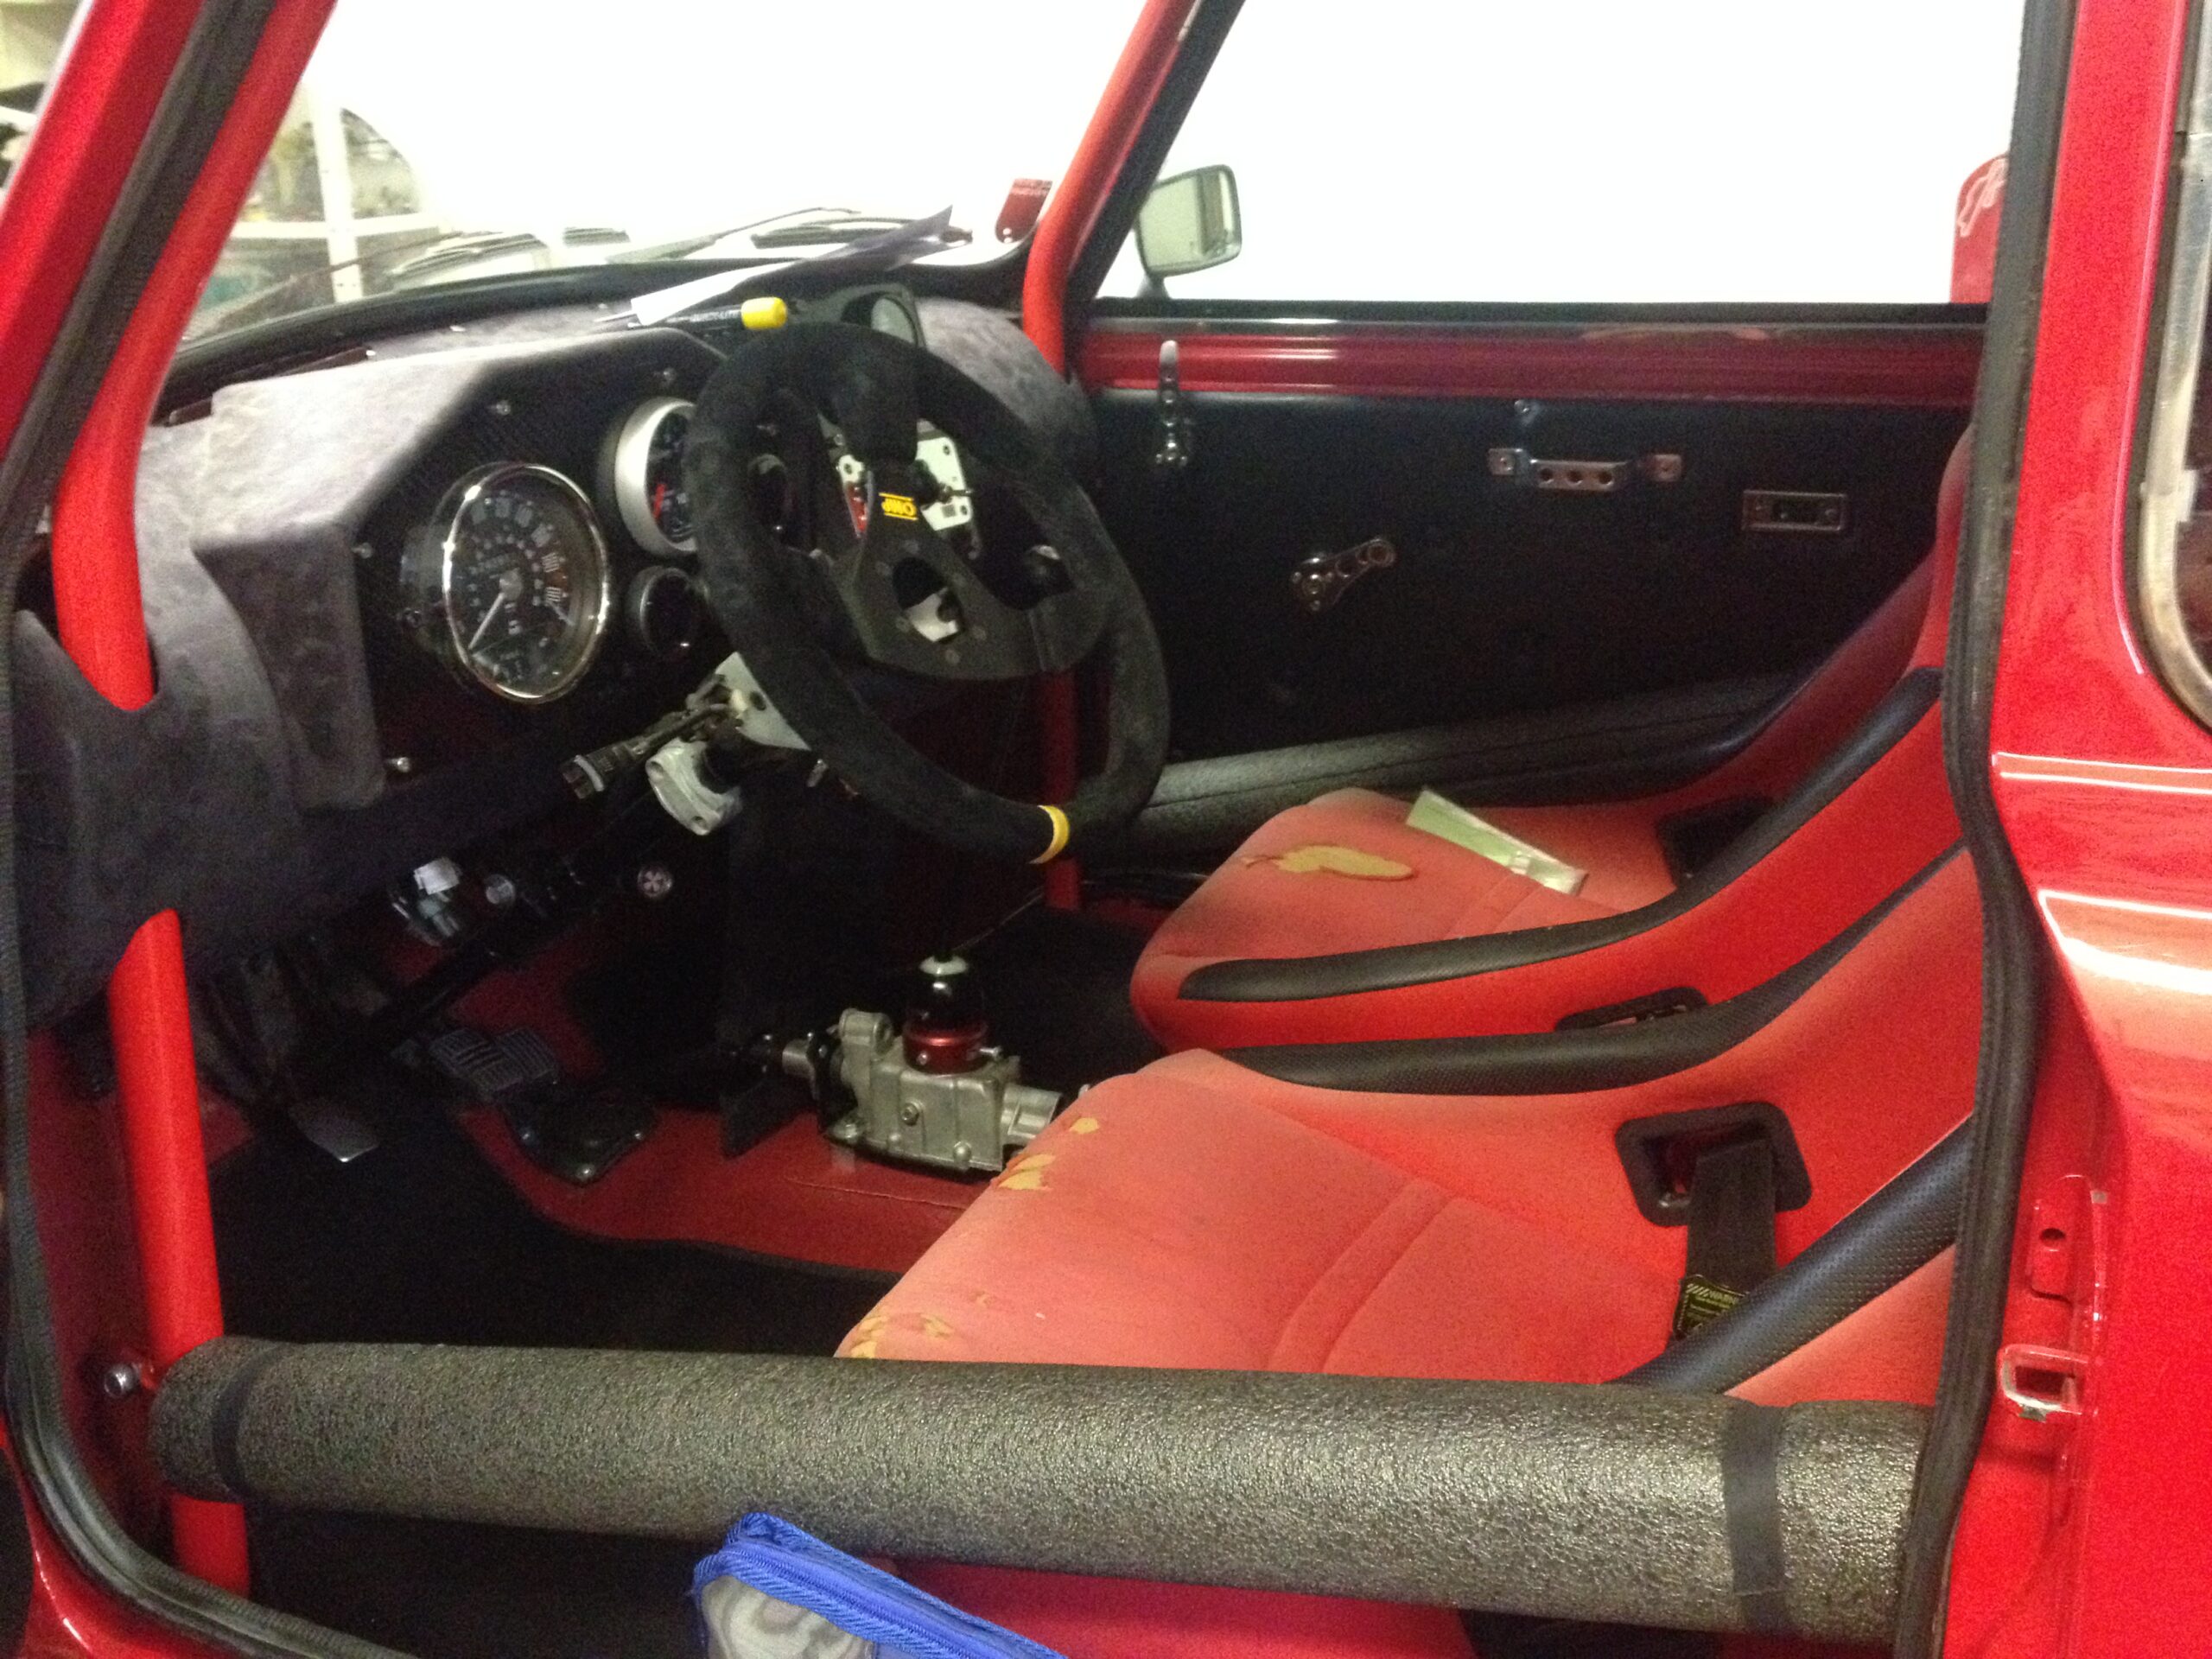 Speedy's Red Racer alias 1380er Austin Mini – TRACKTOOLS